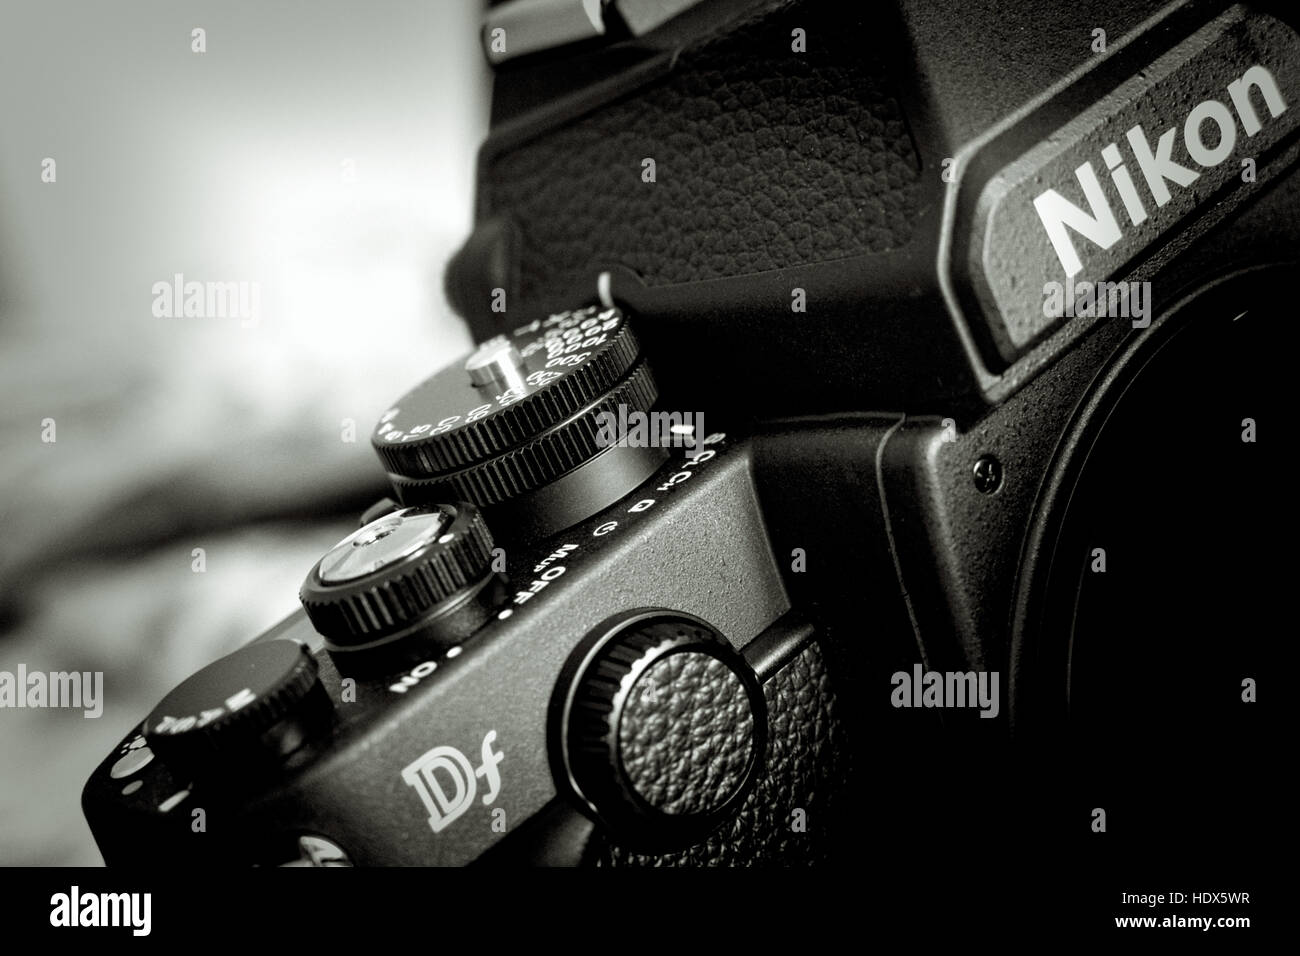 A closeup of Nikon Df SLR camera in monochrome Stock Photo